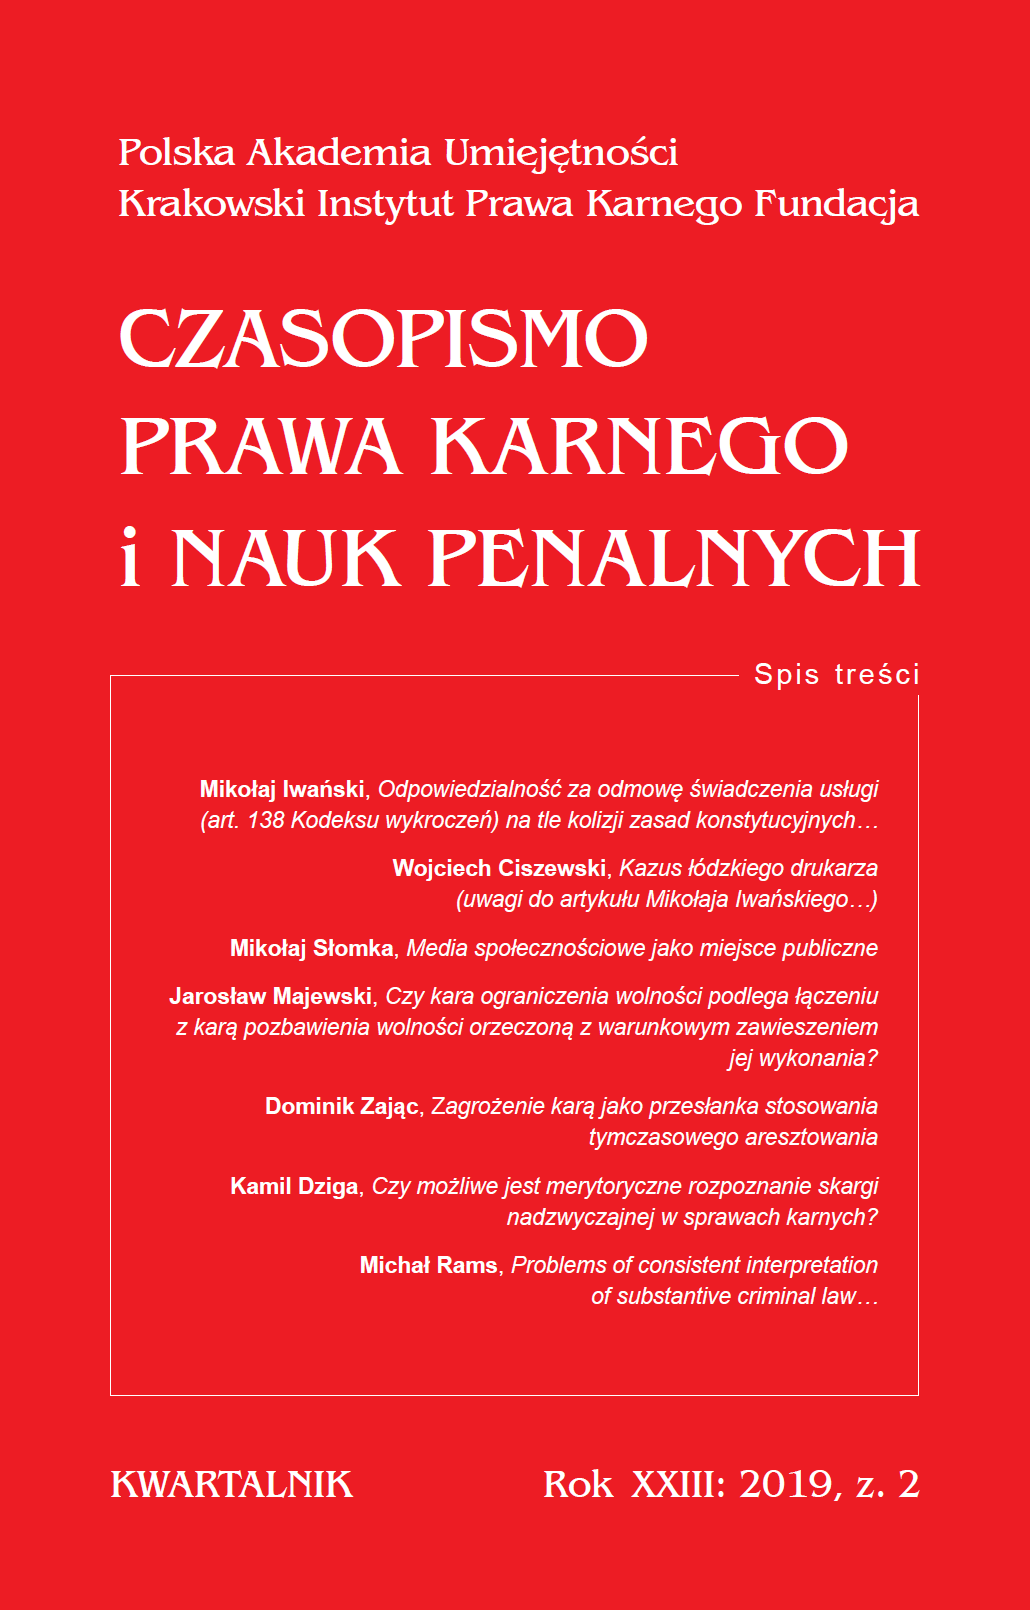 Problems of consistent interpretation of substantive criminal law illustrated on the basis of Polish regulation pertaining to punishability of inside information disclosure